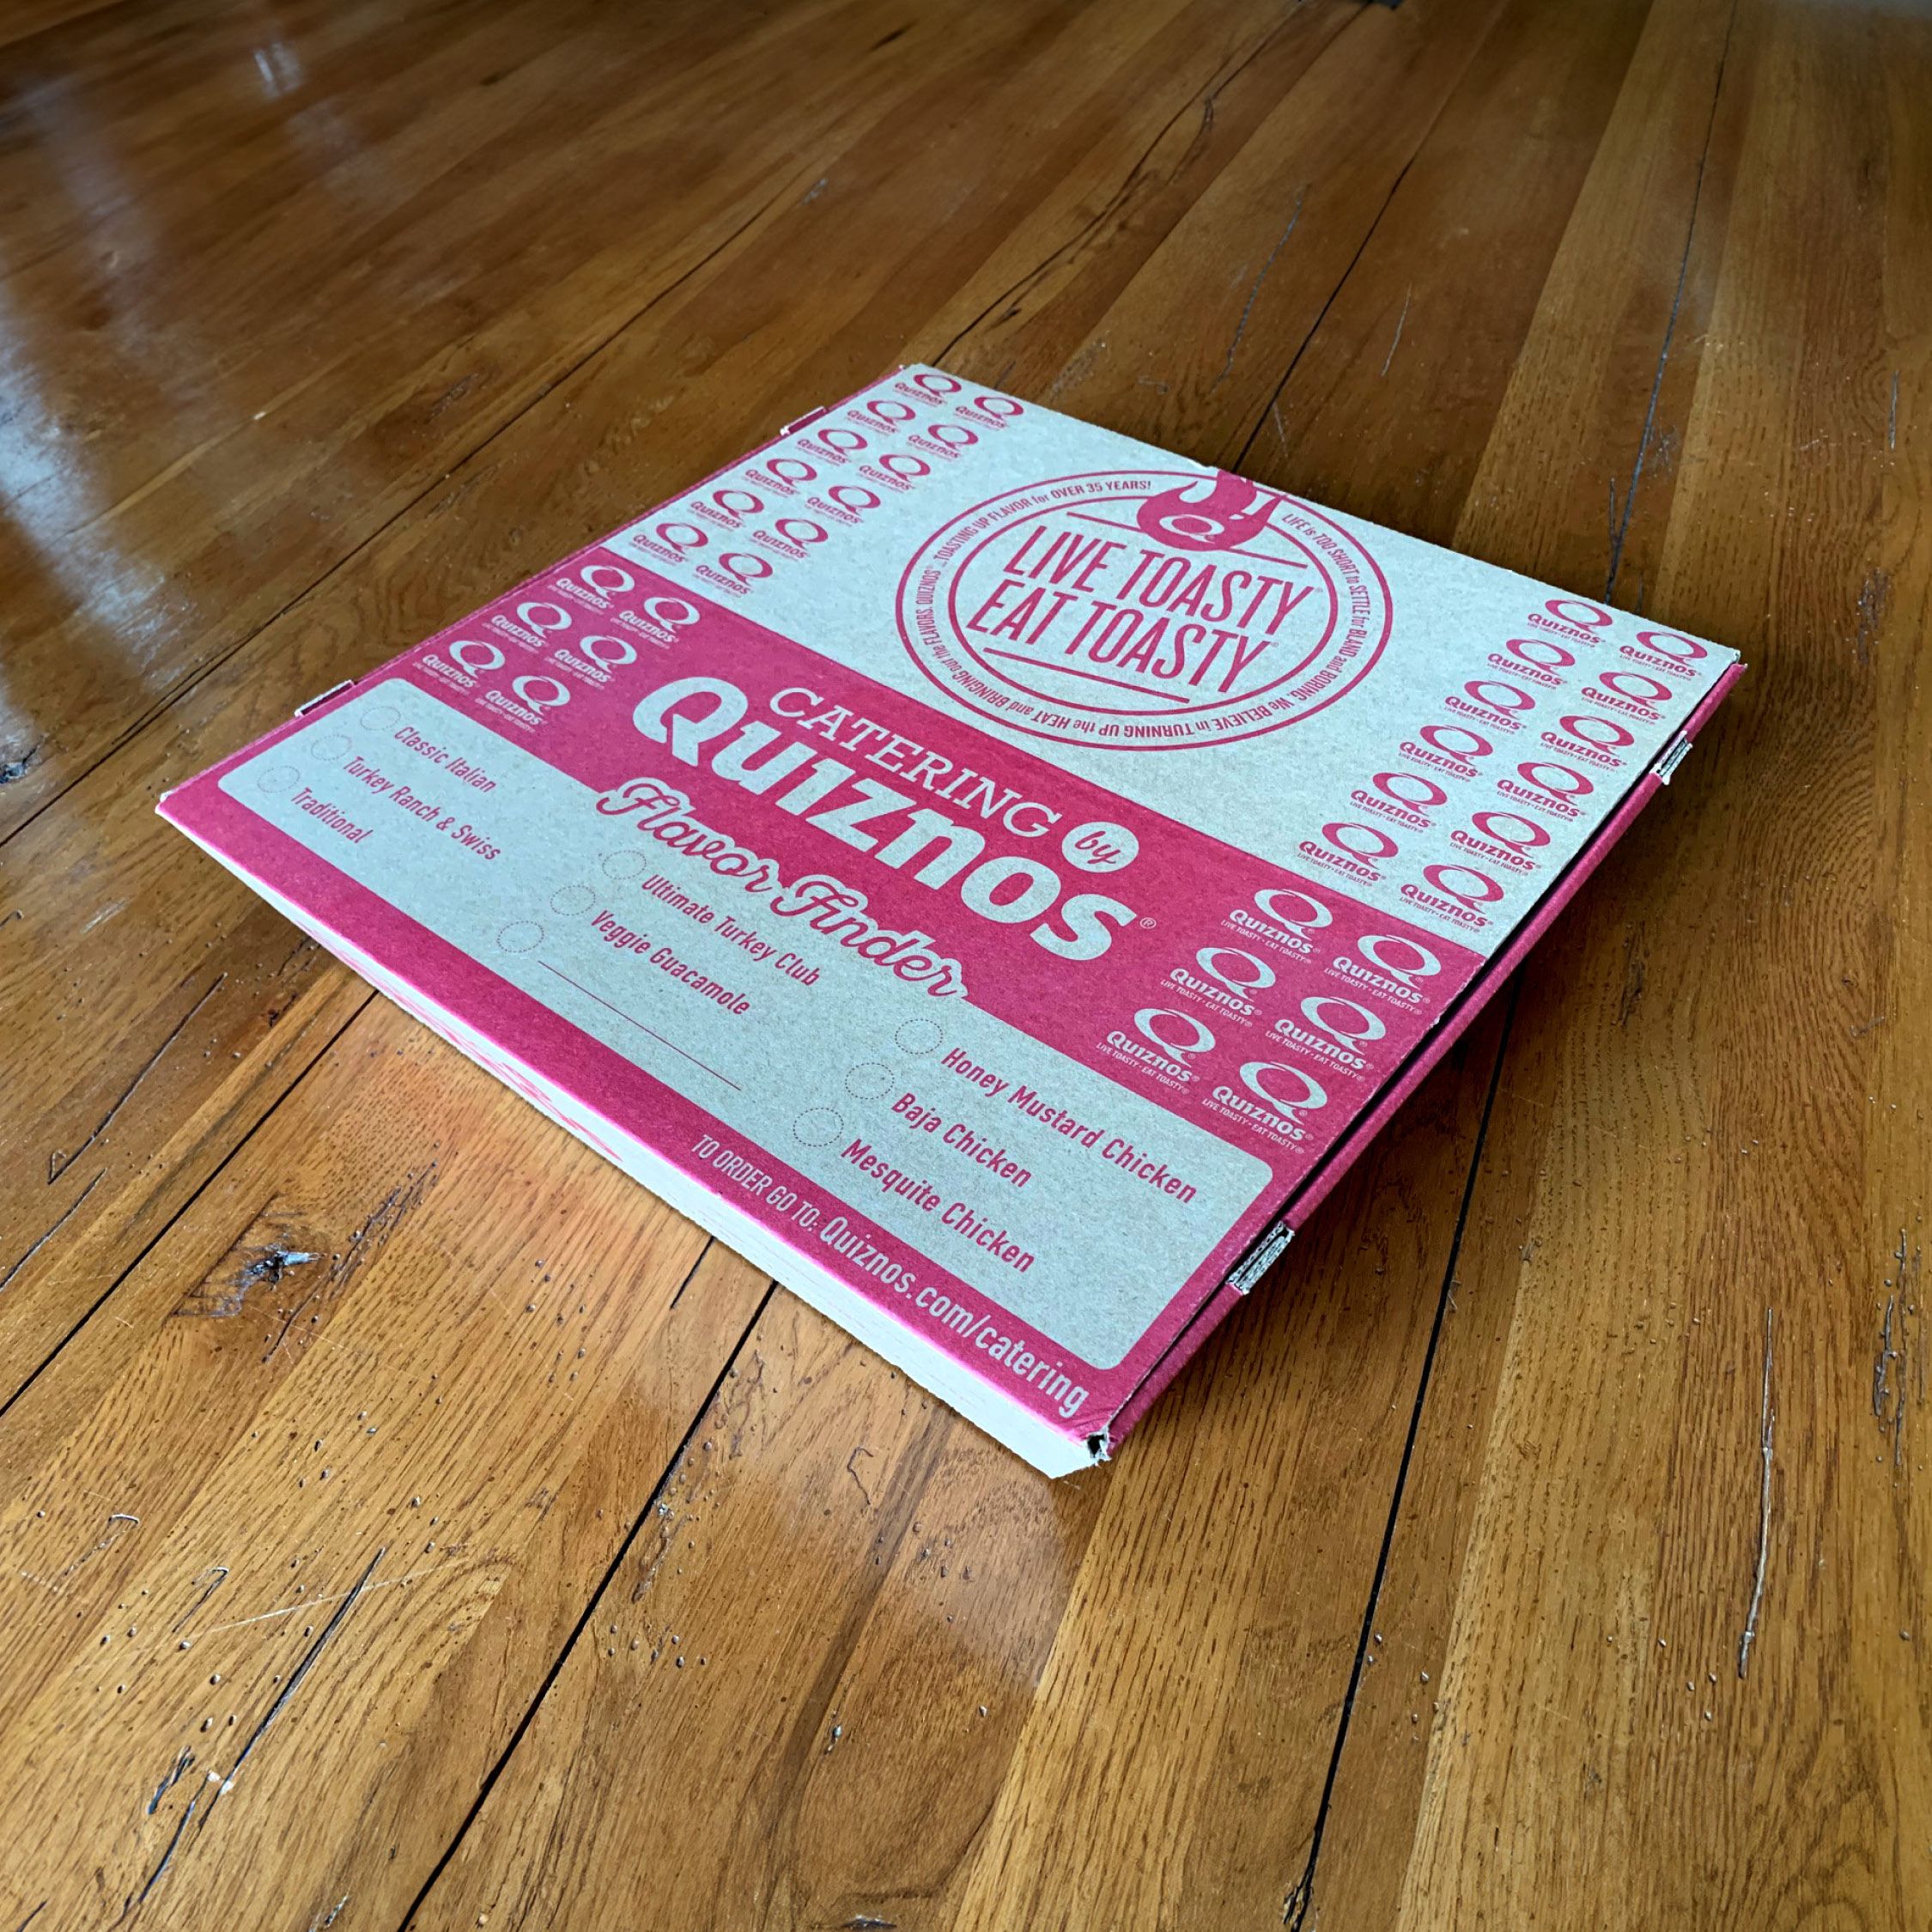 Quiznos Catering Box_Flexo Print 1a